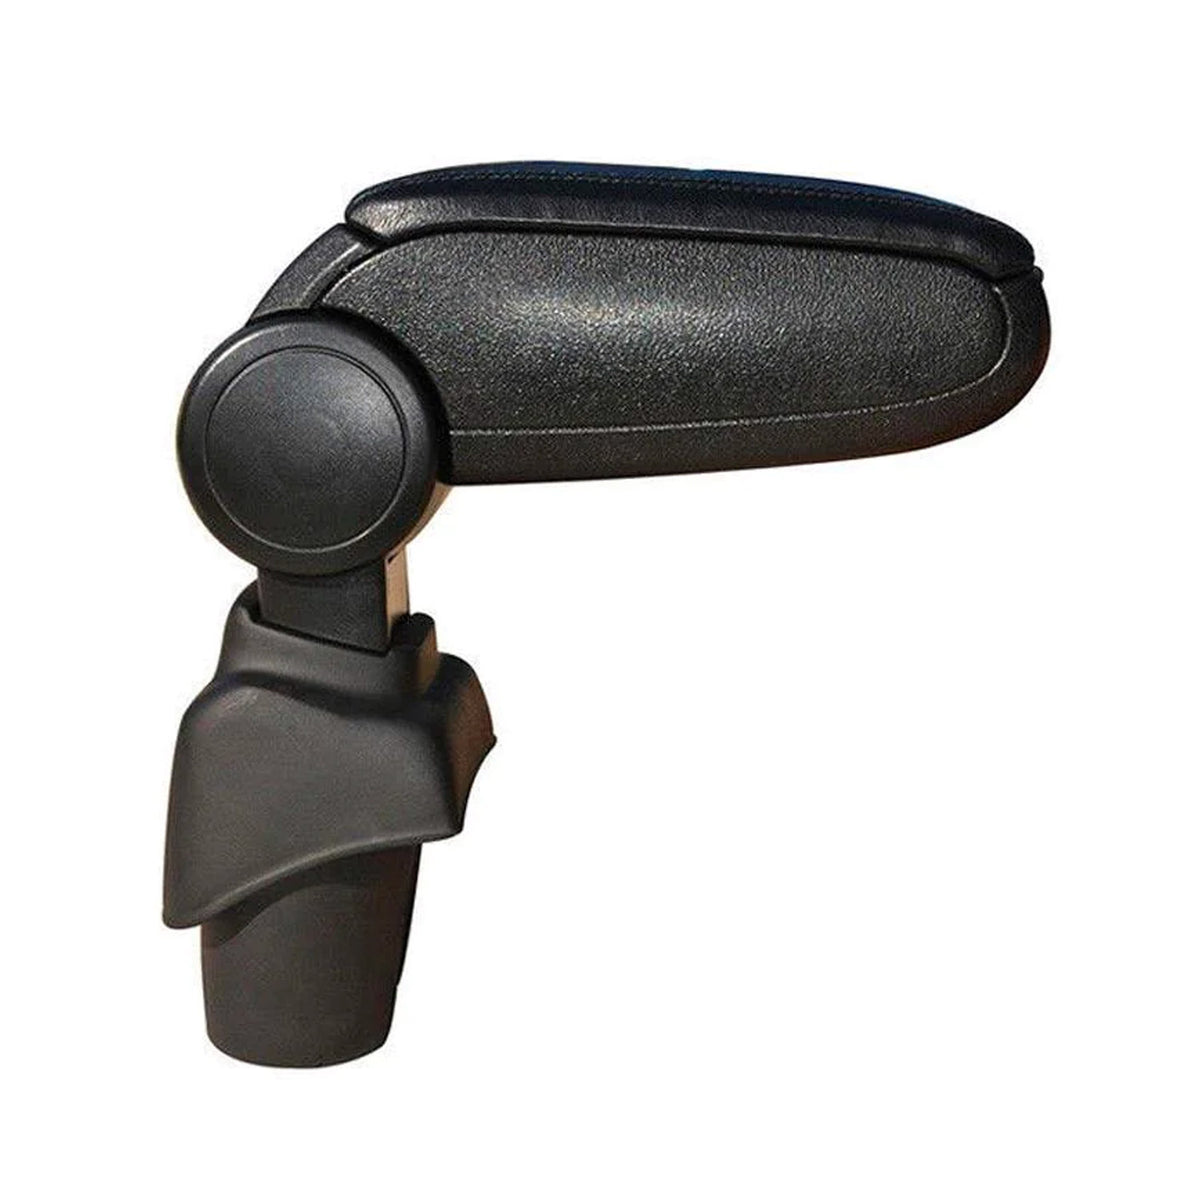 Center armrest armrest center console for VW Caddy 2003-2020 PU leather black